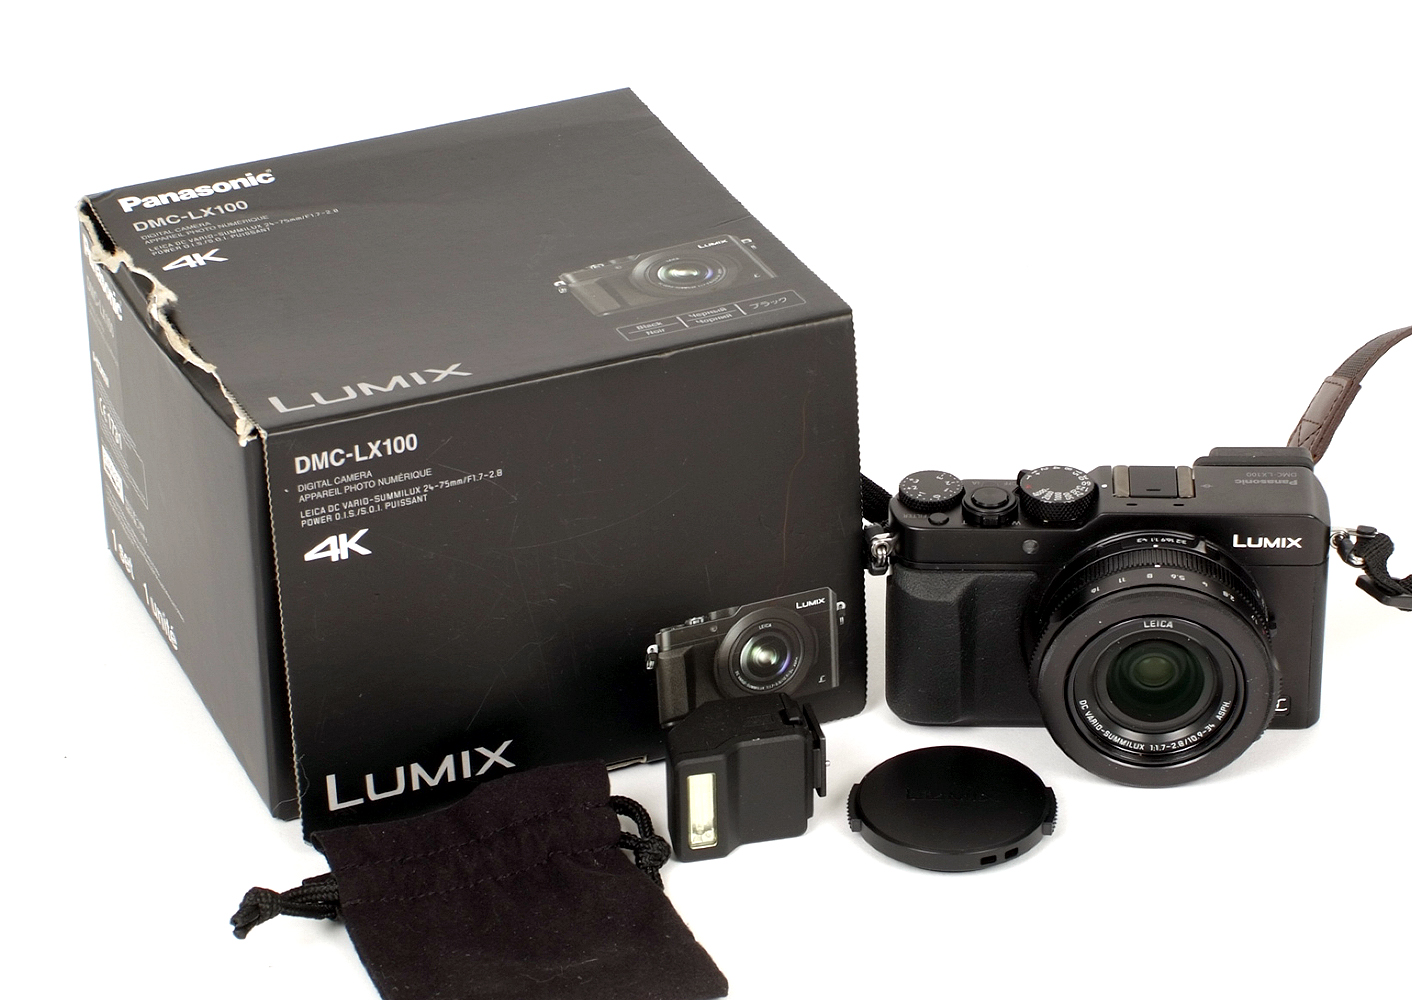 Panasonic DMC-LX100 Digital Camera. (condition 4E) With Leica DC Vario-Summilux 24-75mm f1.7-2.